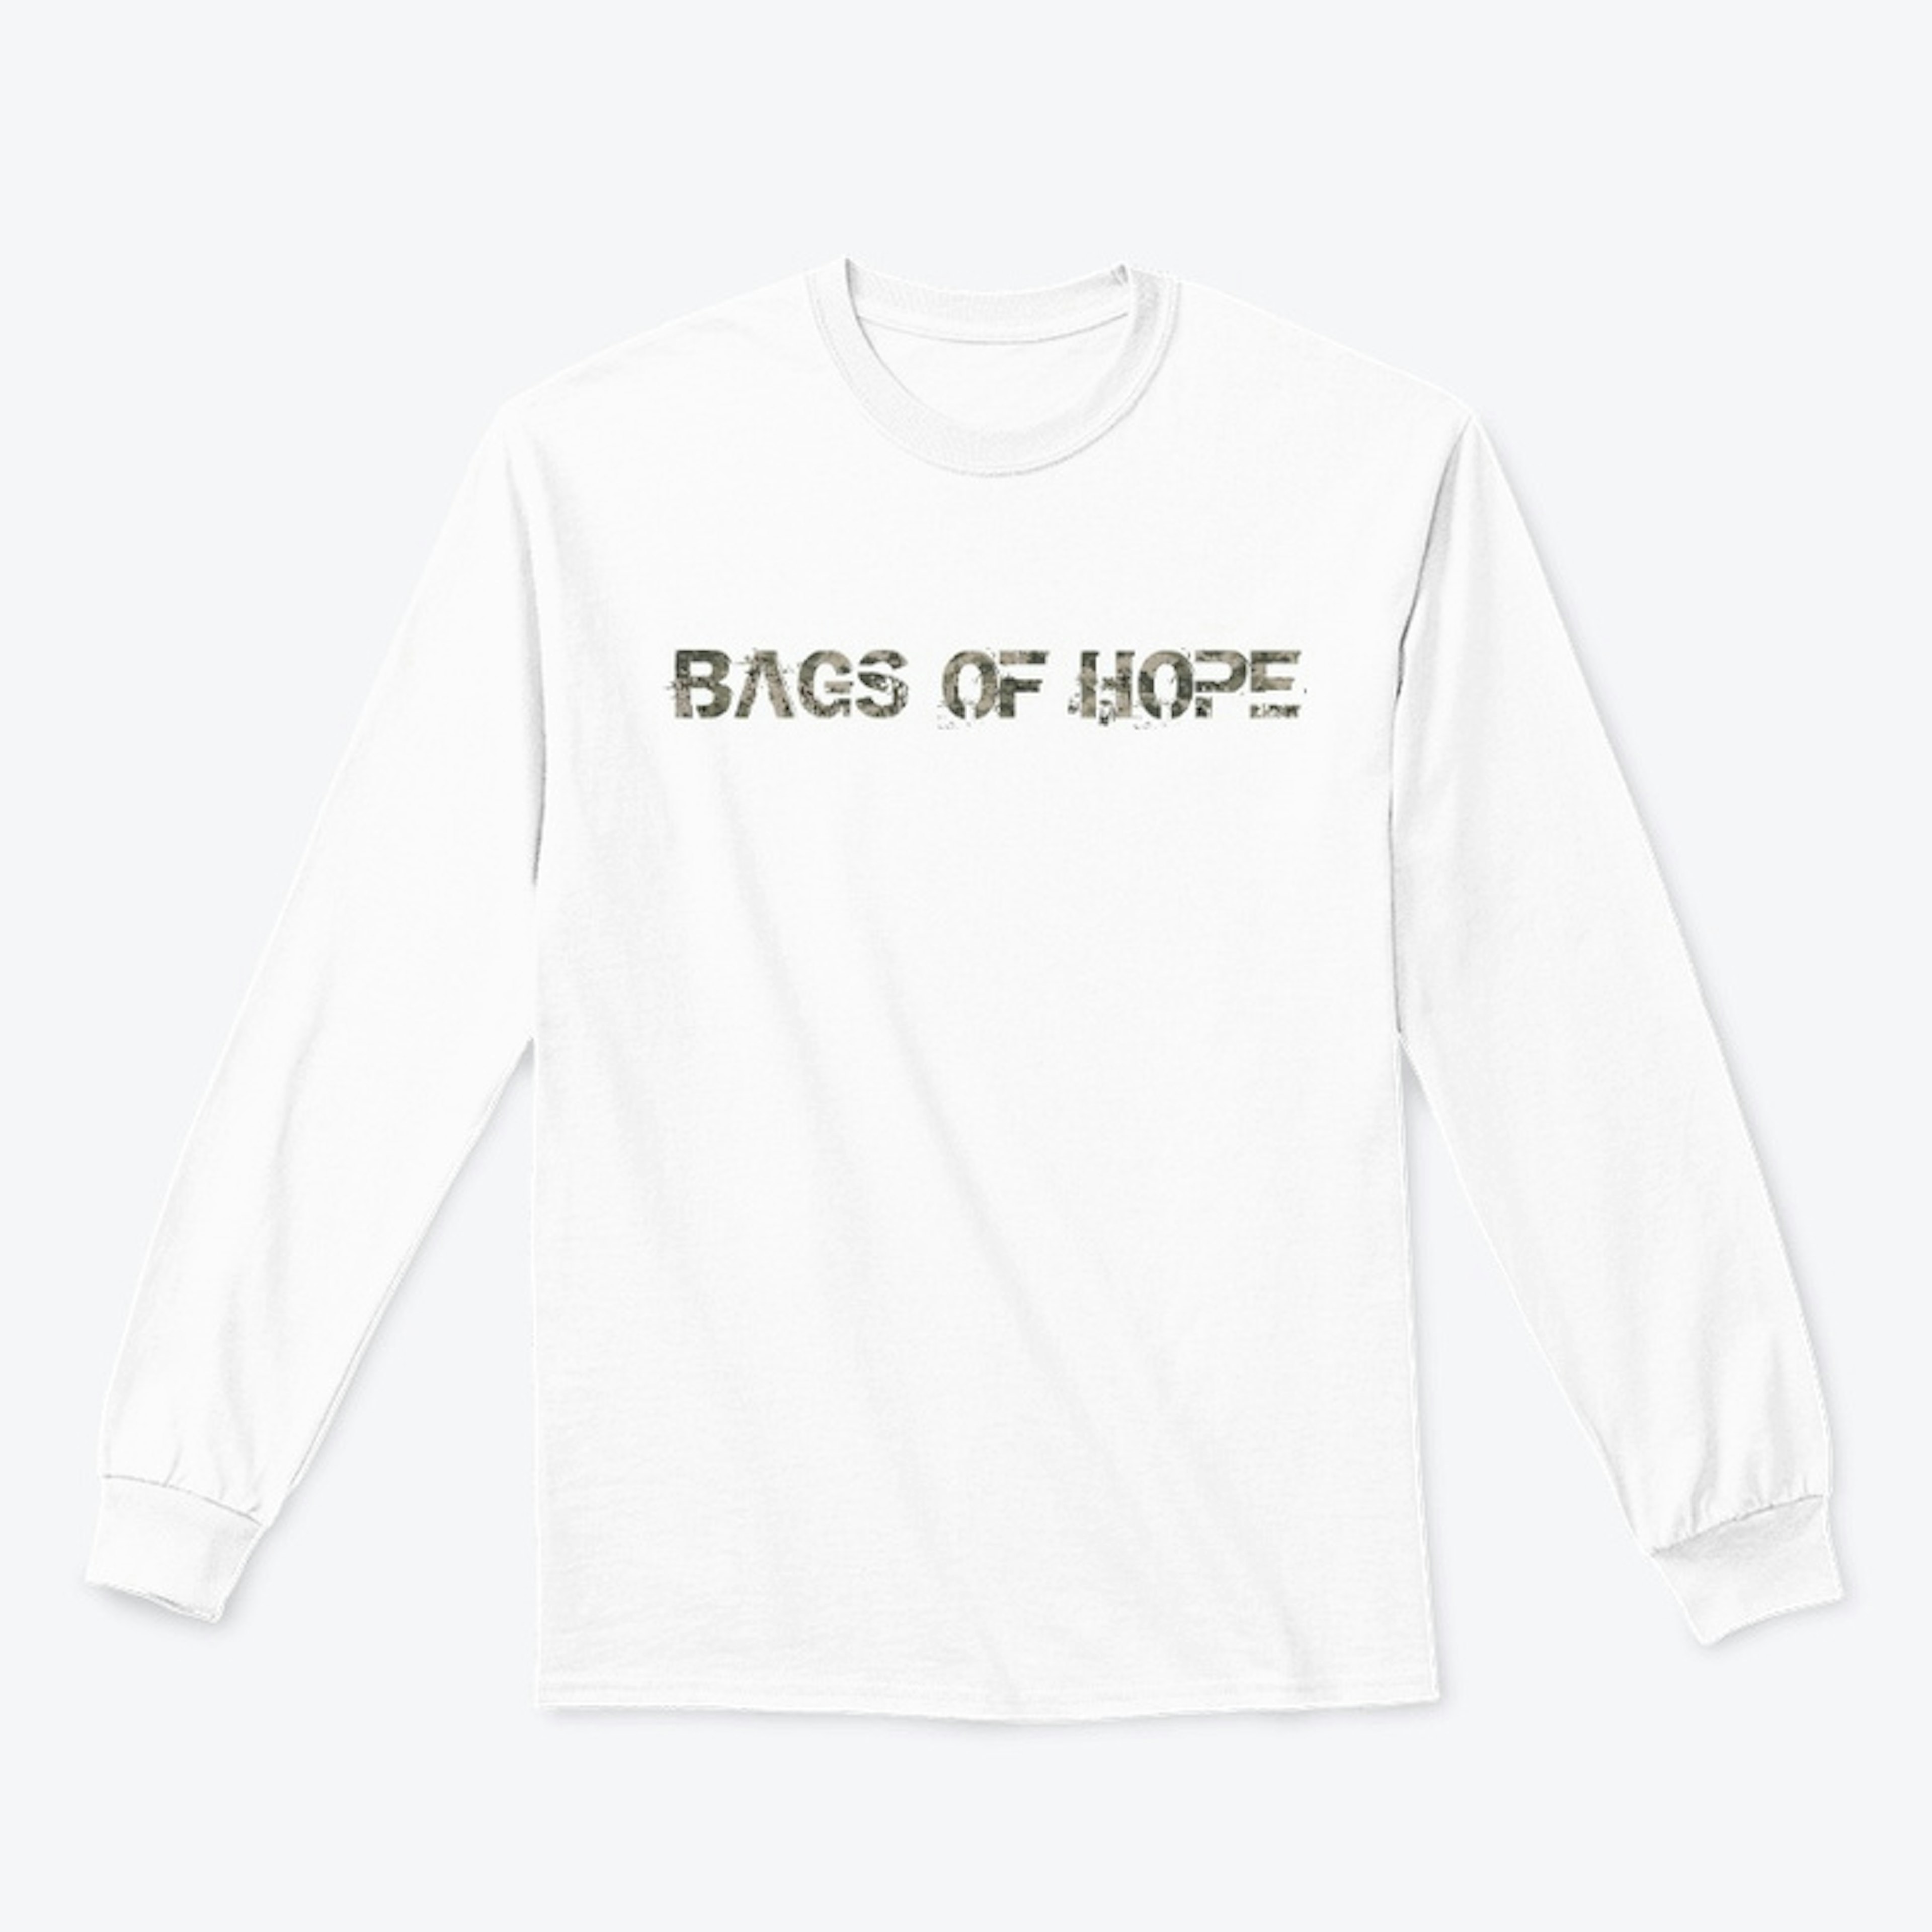 Bags of Hope- Digital Camo 2019